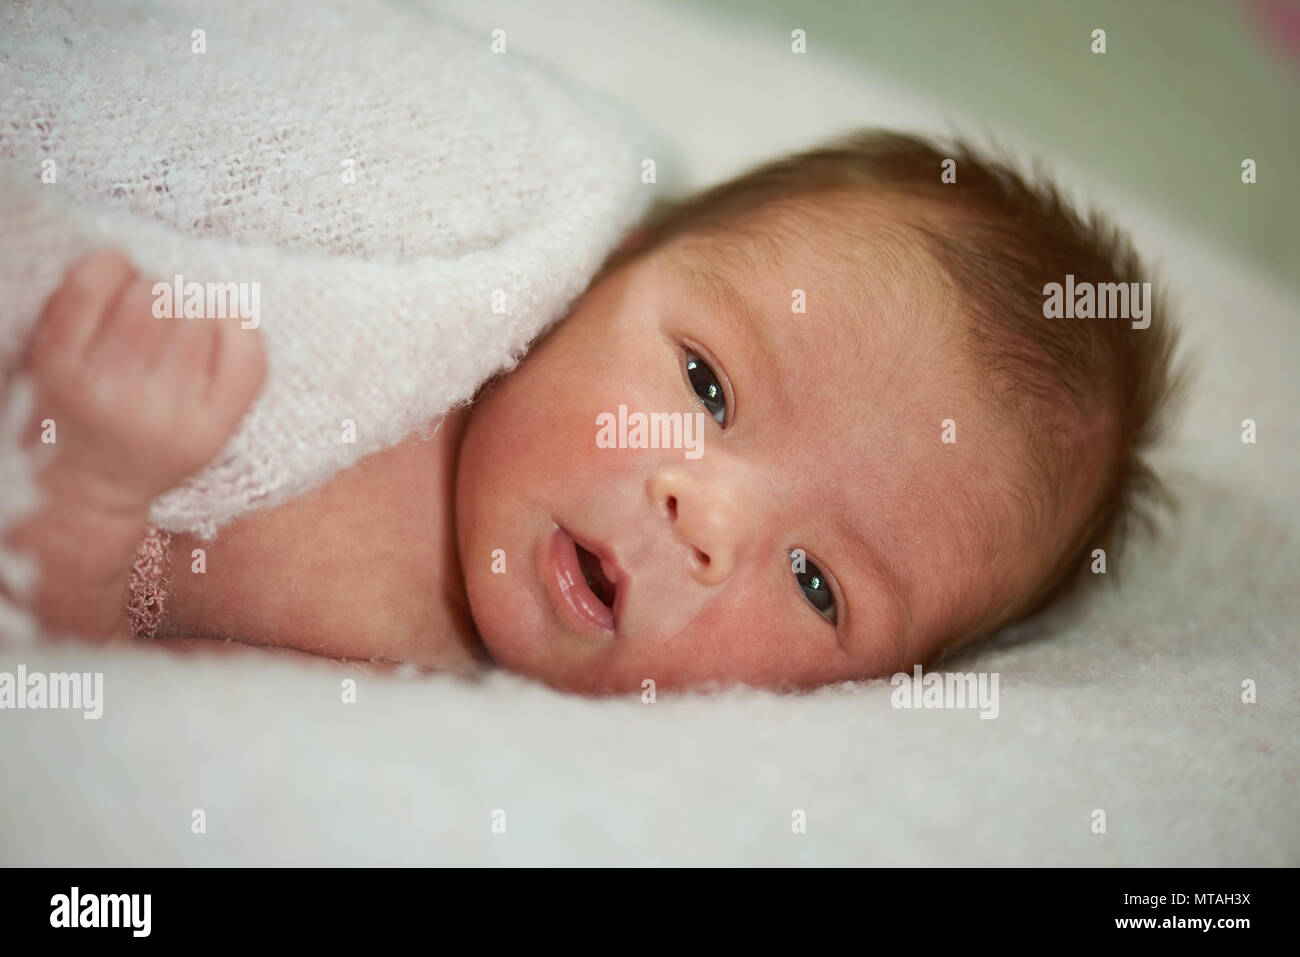 Clean awake newborn baby close up portrait on soft background Stock Photo